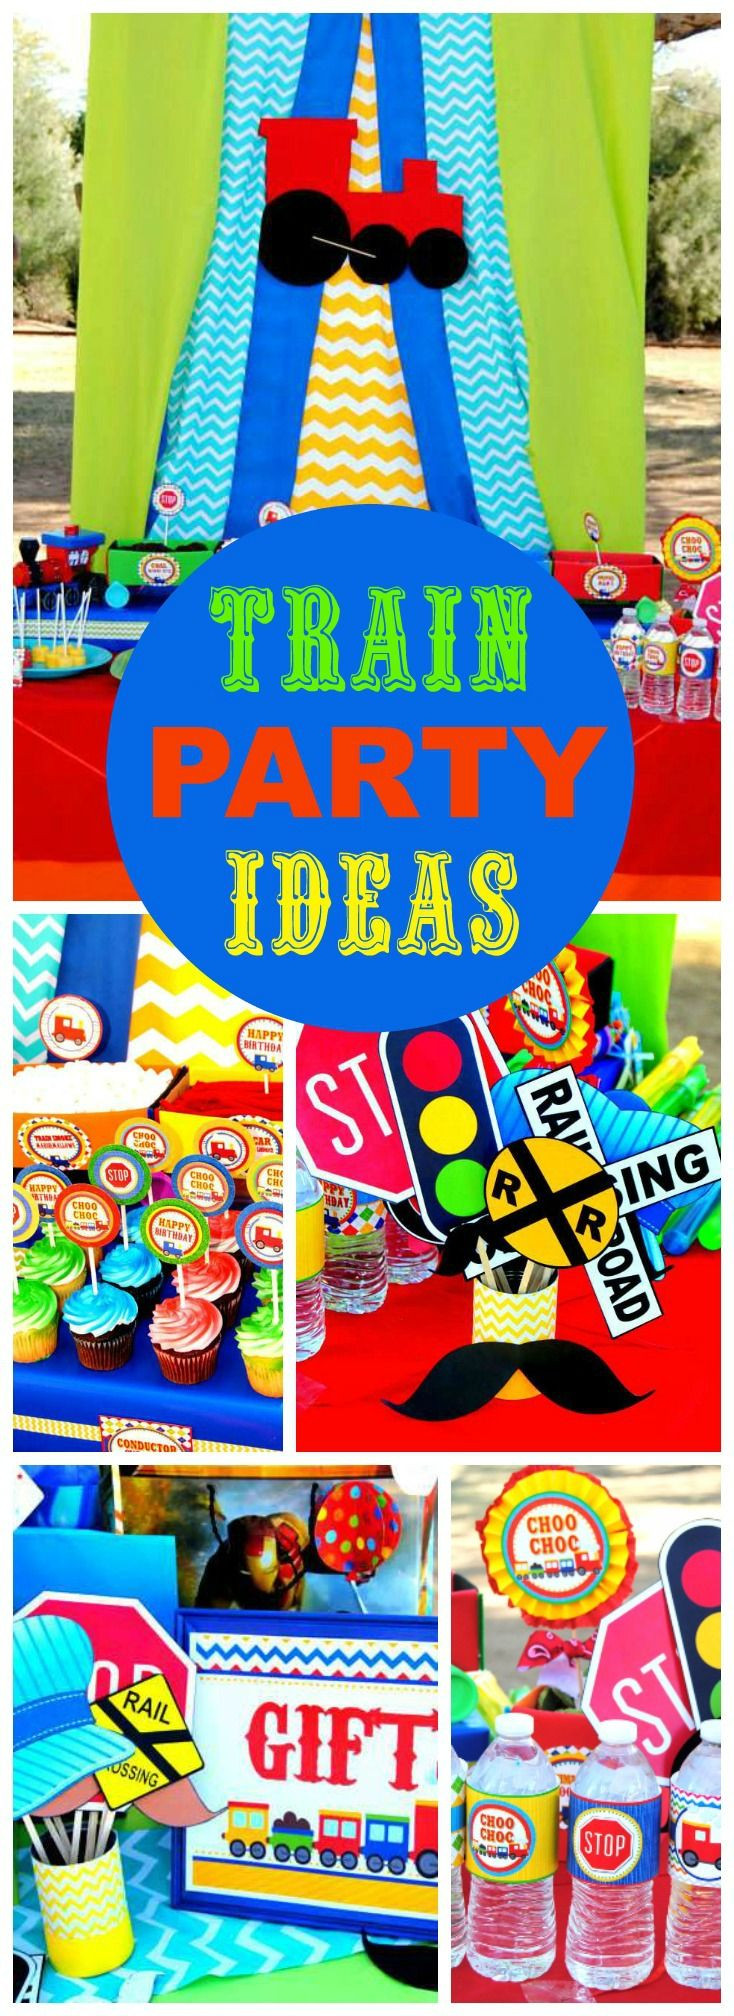 Boys 2Nd Birthday Party Ideas
 Best 25 Boy birthday parties ideas on Pinterest